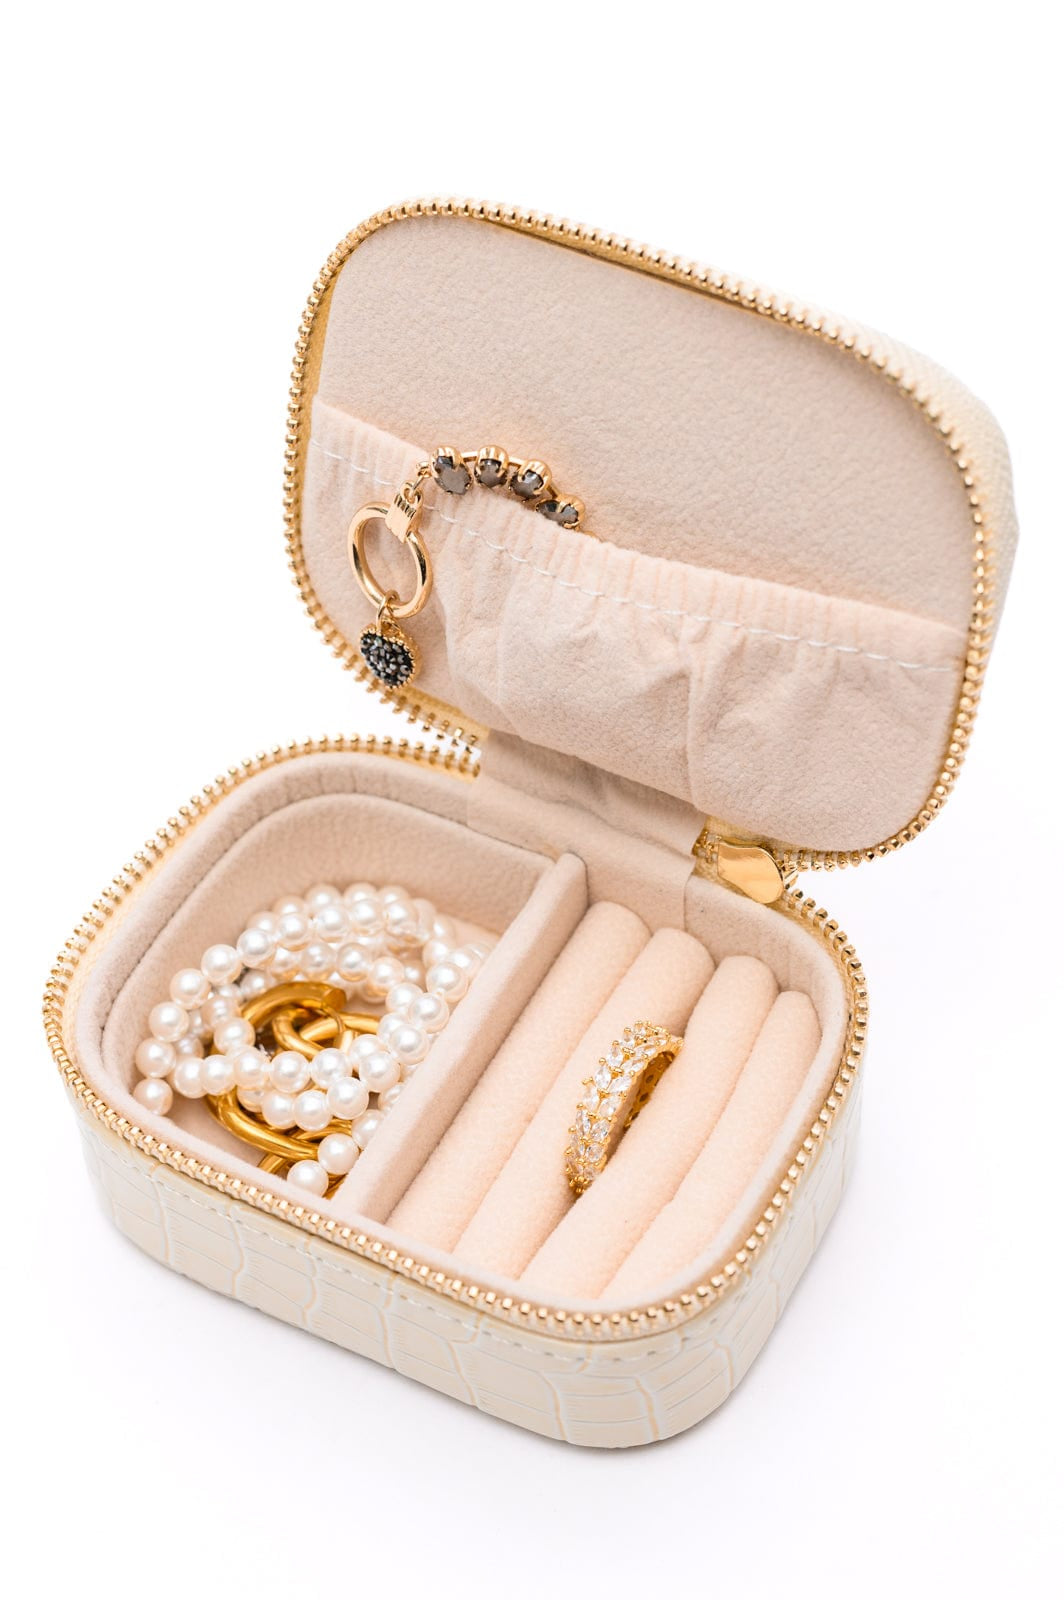 Travel Jewelry Case in Cream Snakeskin-Womens-Stay Foxy Boutique, Florissant, Missouri